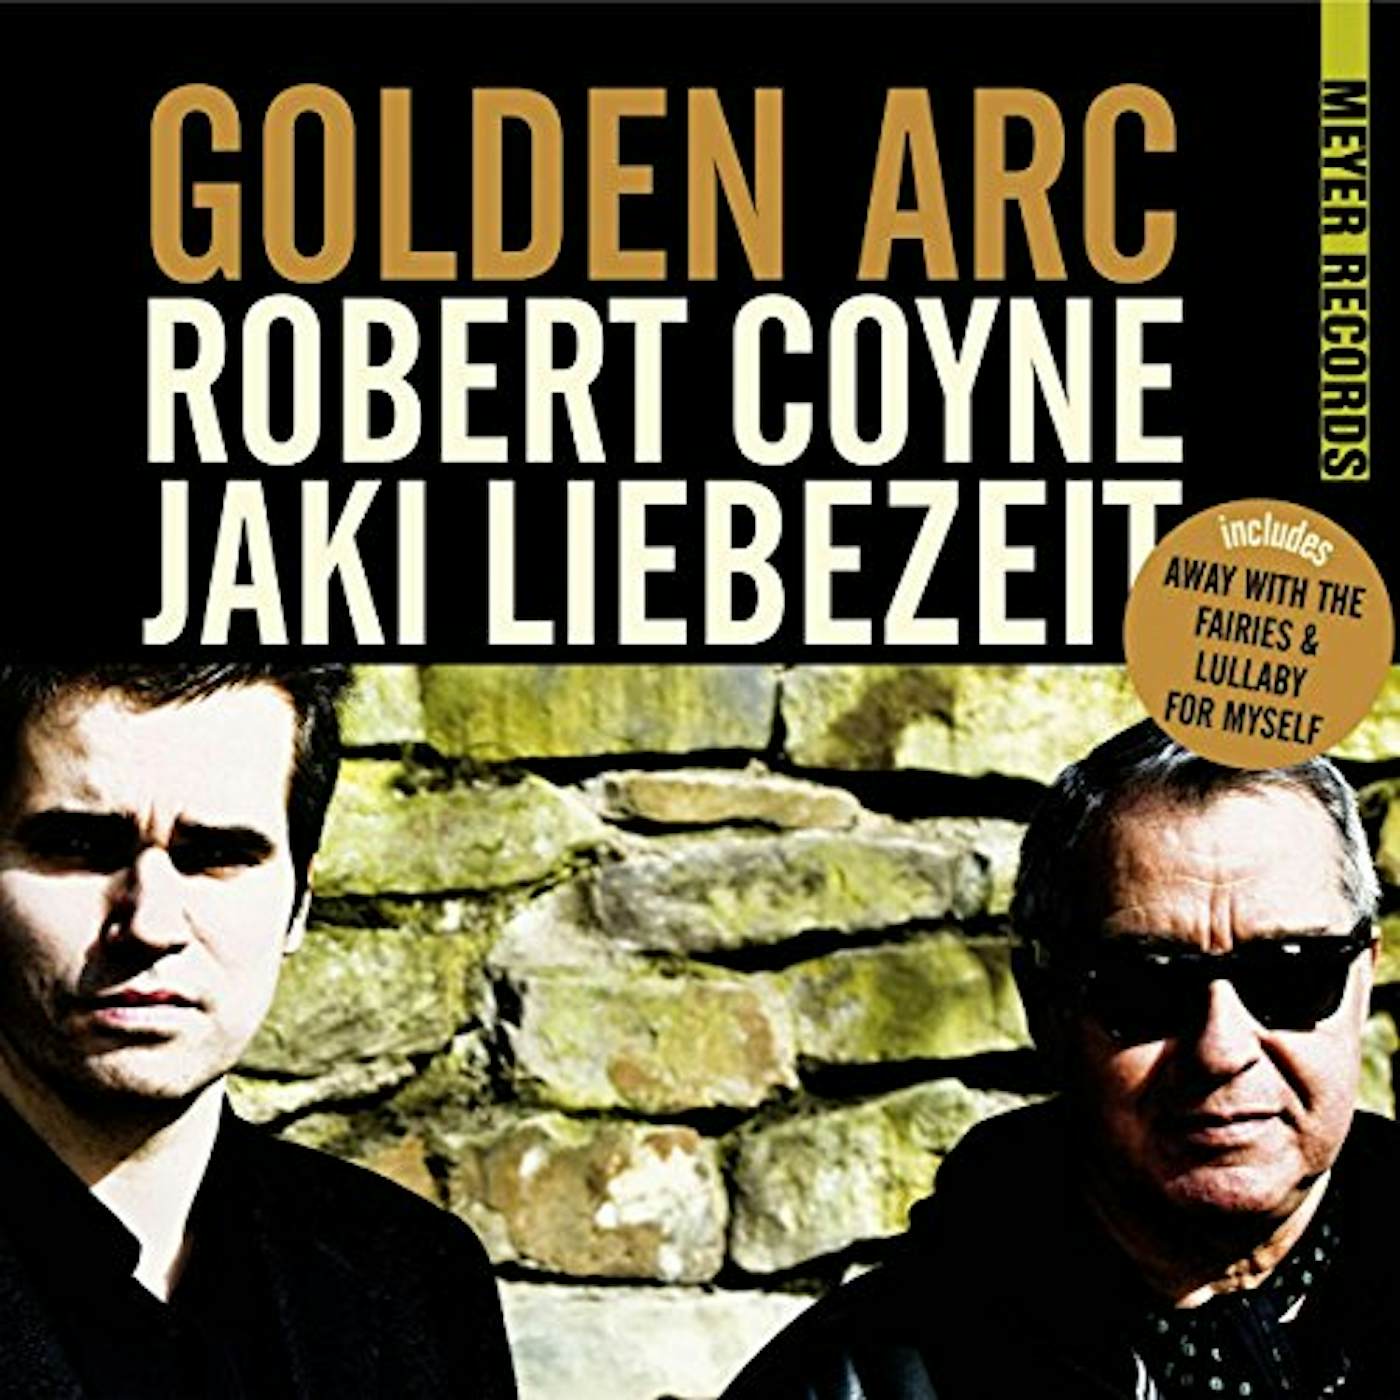 Robert Coyne Golden Arc Vinyl Record